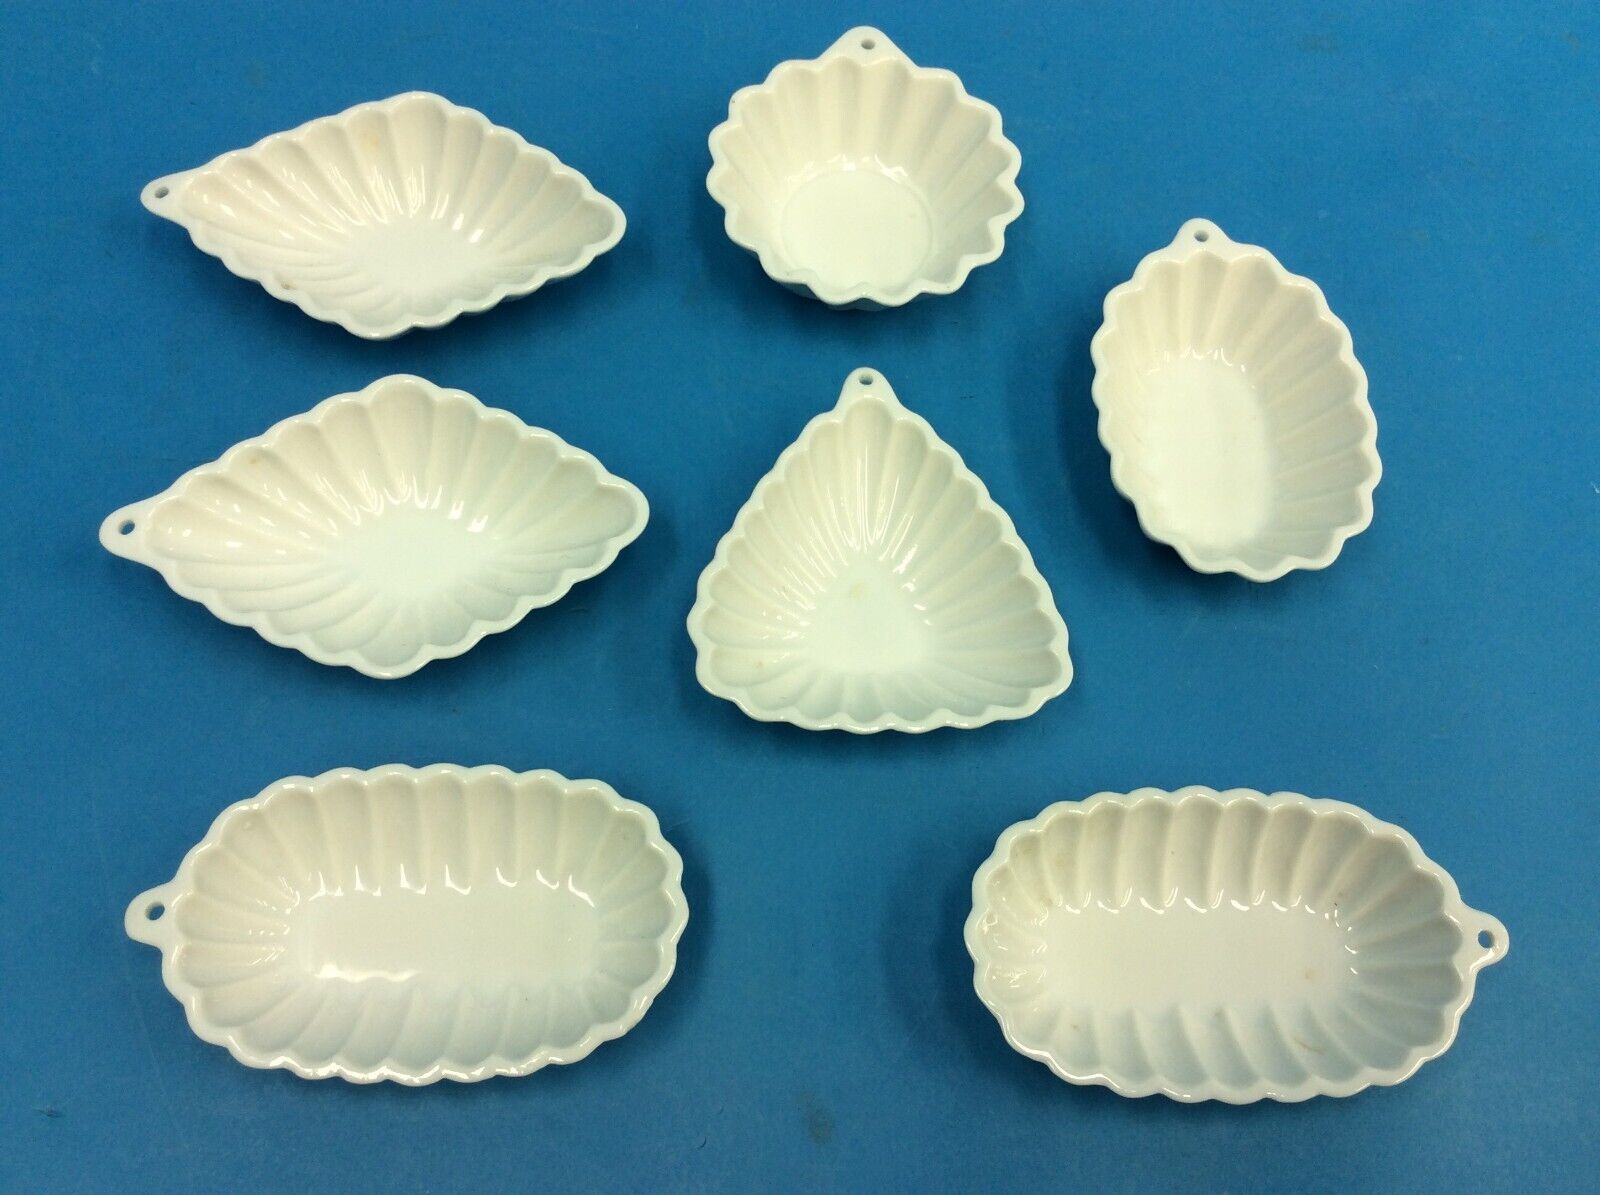 Small Ruffled Glass Decorative White Shell-Like Hanging Salt Cellars Bowls